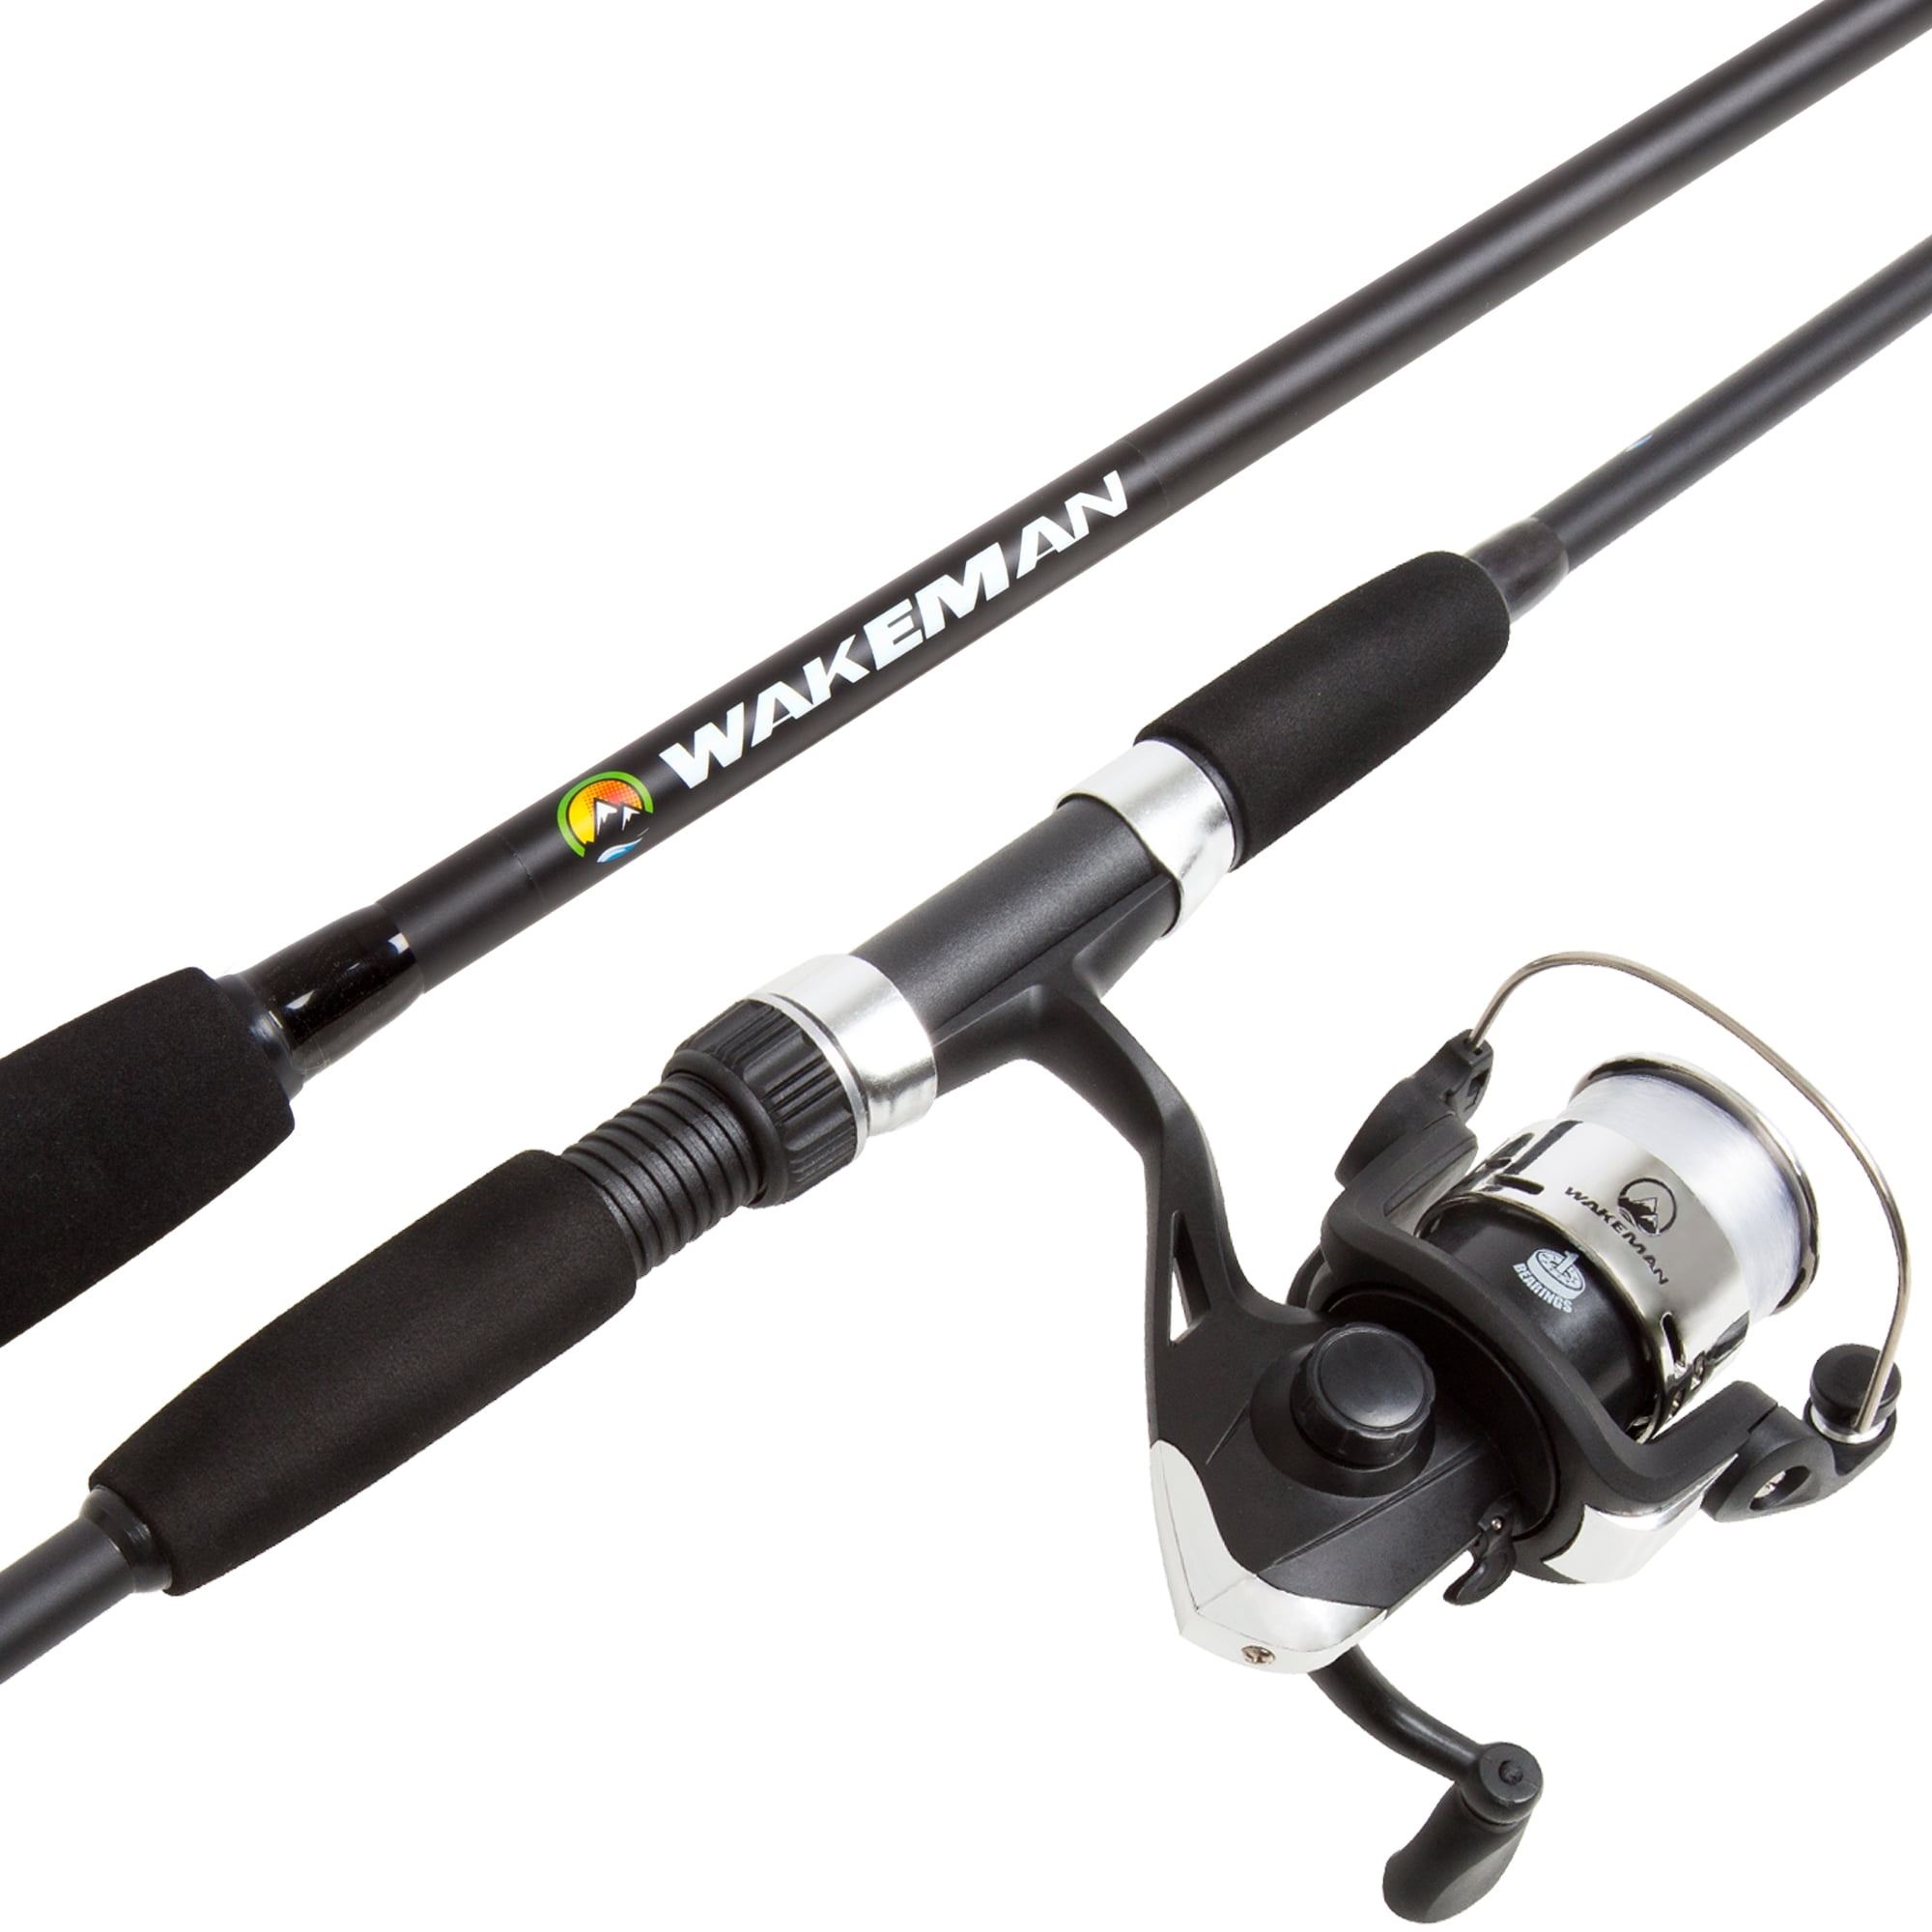 Wakeman Pro Series Spinning Fishing Rod and Reel Combo, Black